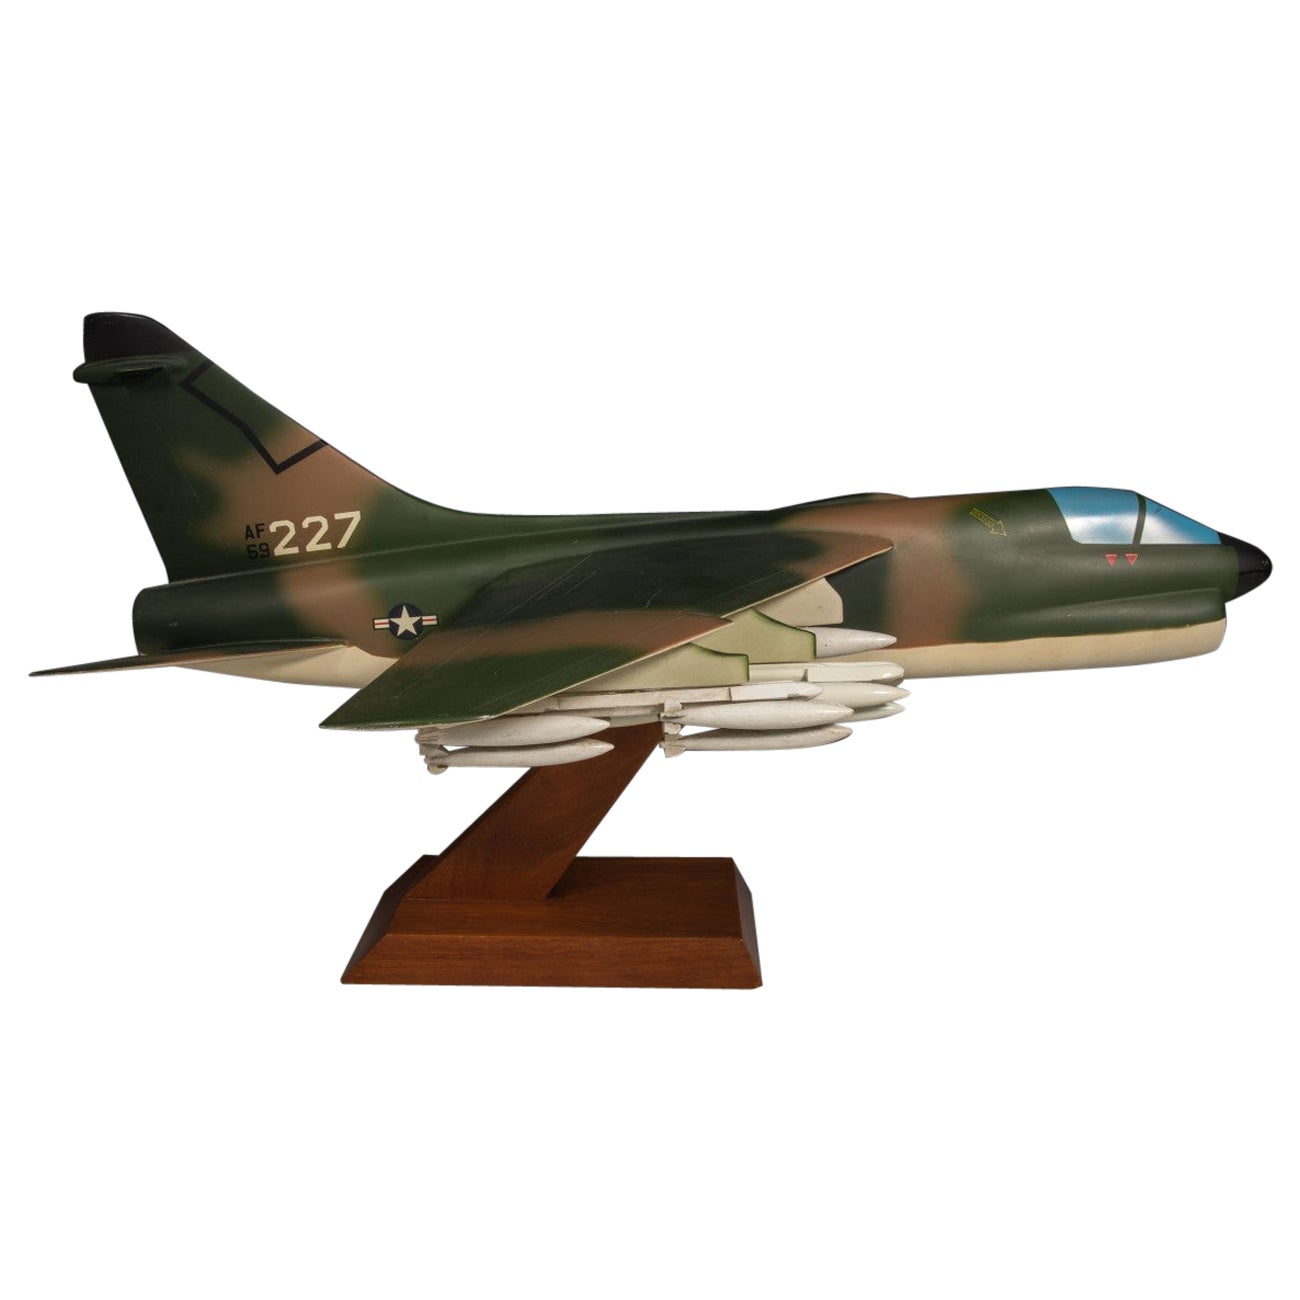 USAF LTV A-7 Corsair II Model Fighter Jet Airplane For Sale